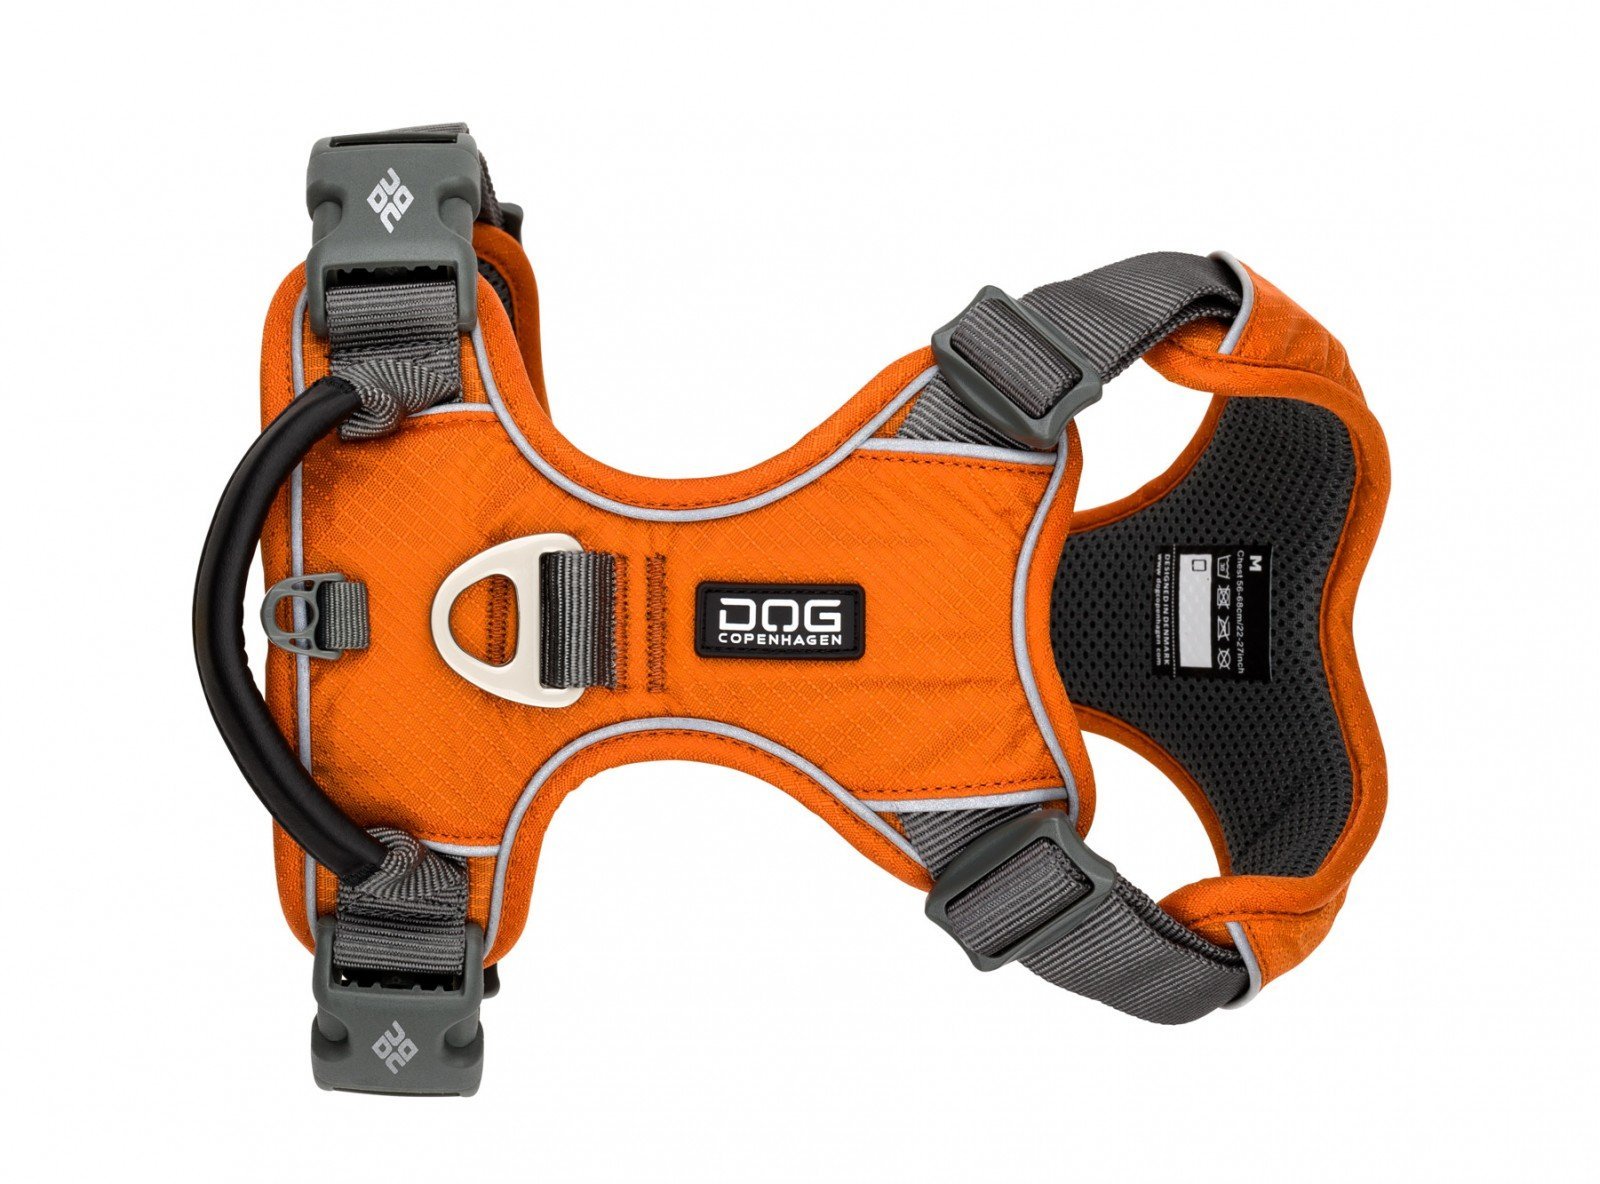 Dog Copenhagen - Comfort Walk Pro Harness - "Version" 2020 Orange Sun